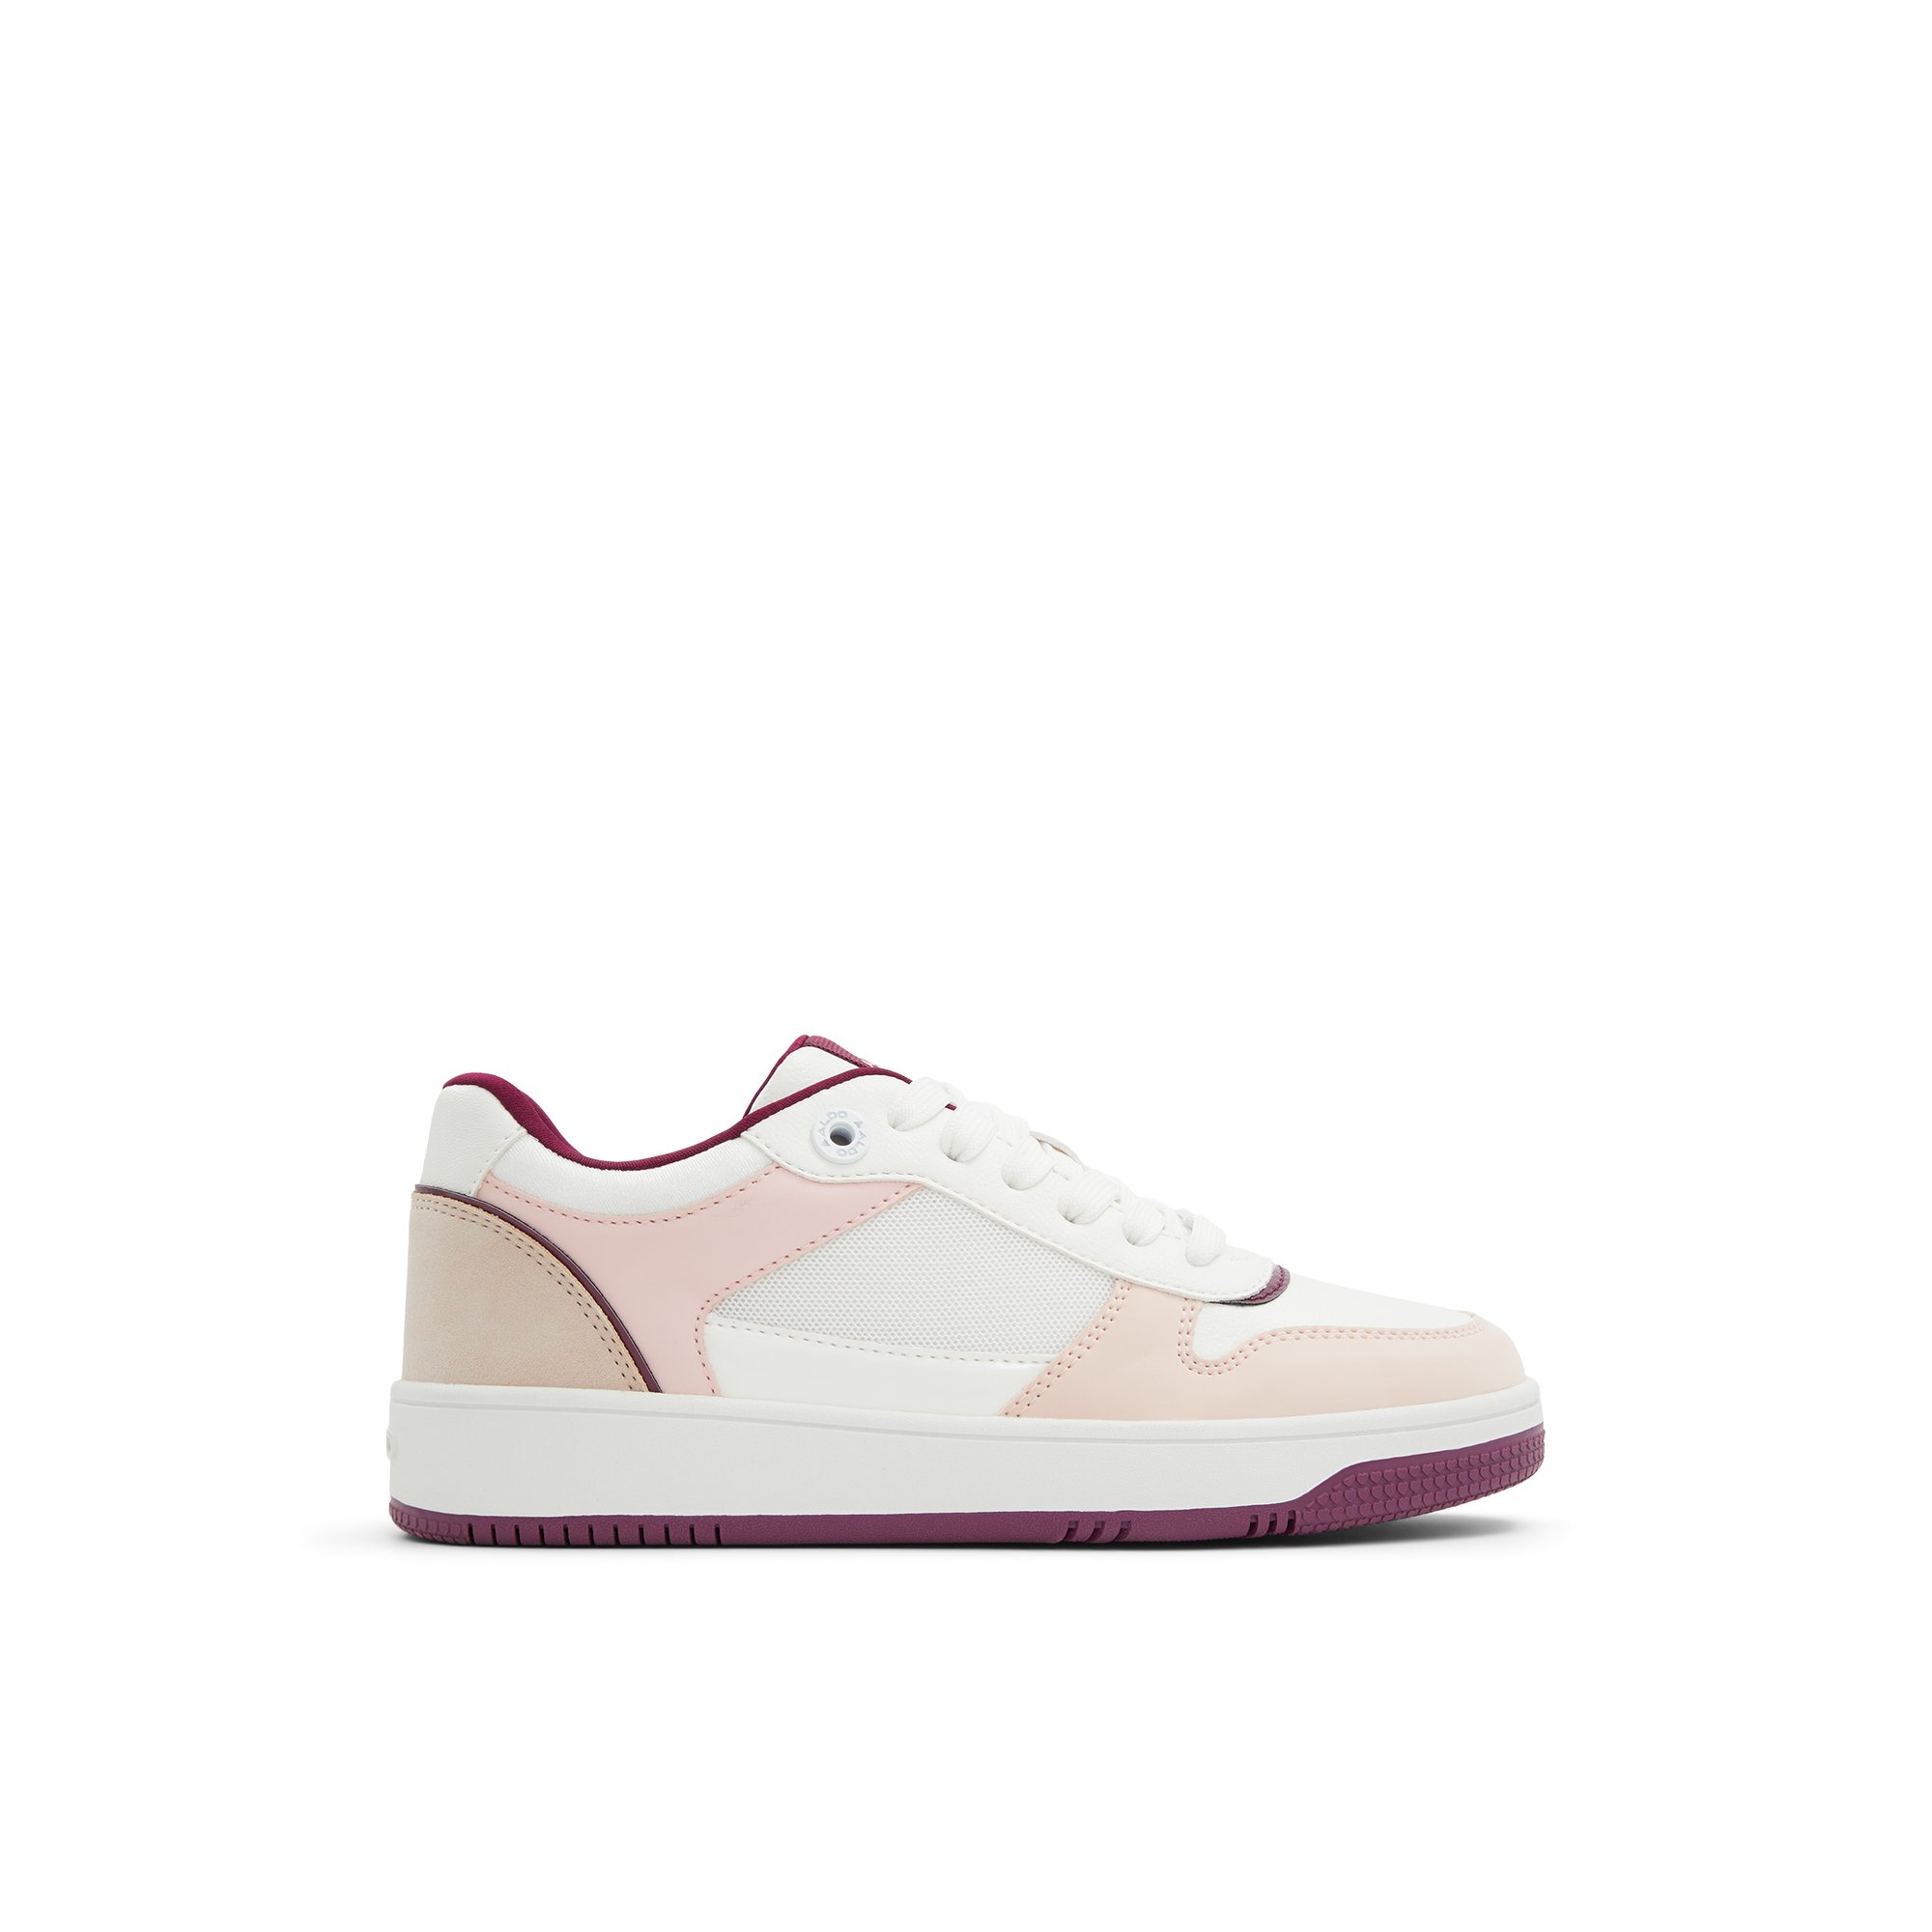 ALDO Retroact - Women's Low Top Sneaker Sneakers - Pink